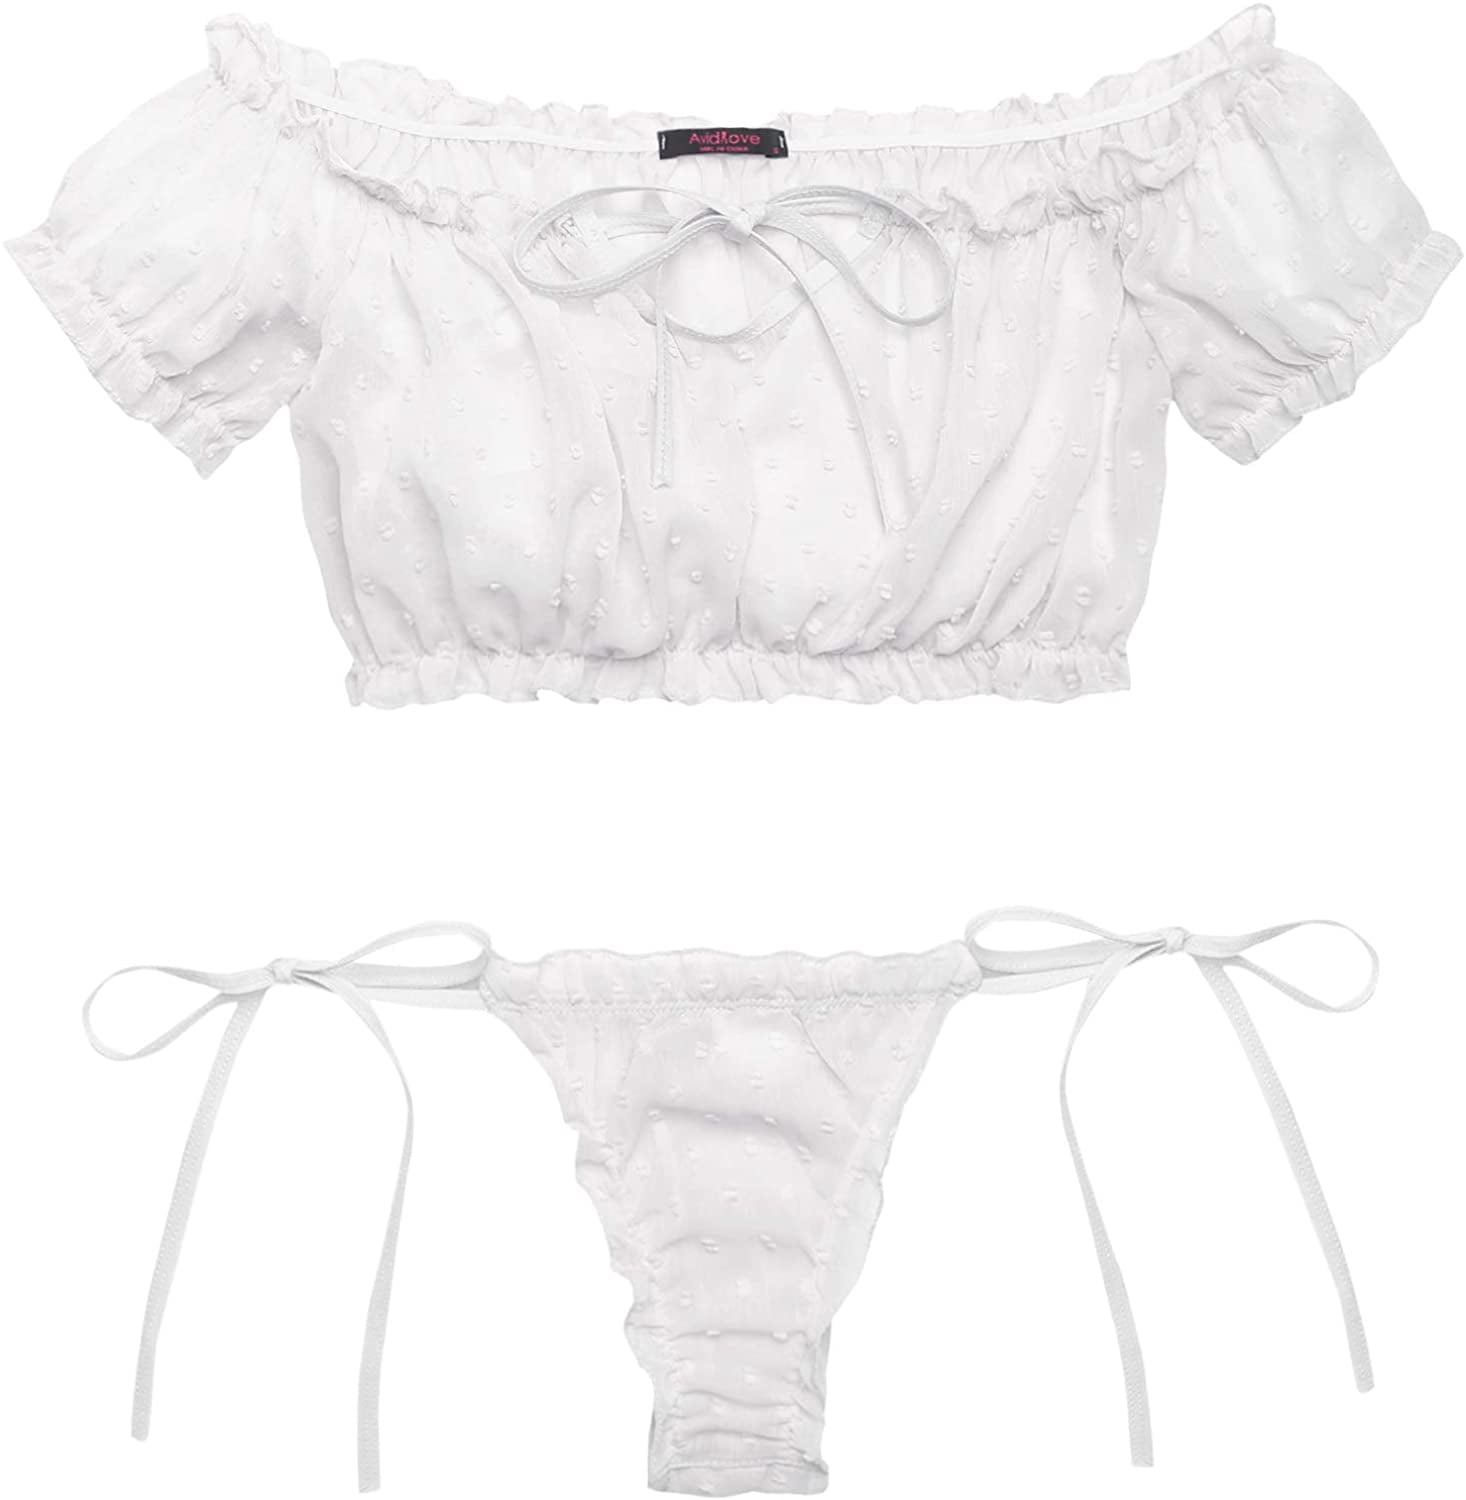 Avidlove Women's Lace Lingerie Bra and Panty Set Bow Tie Babydoll